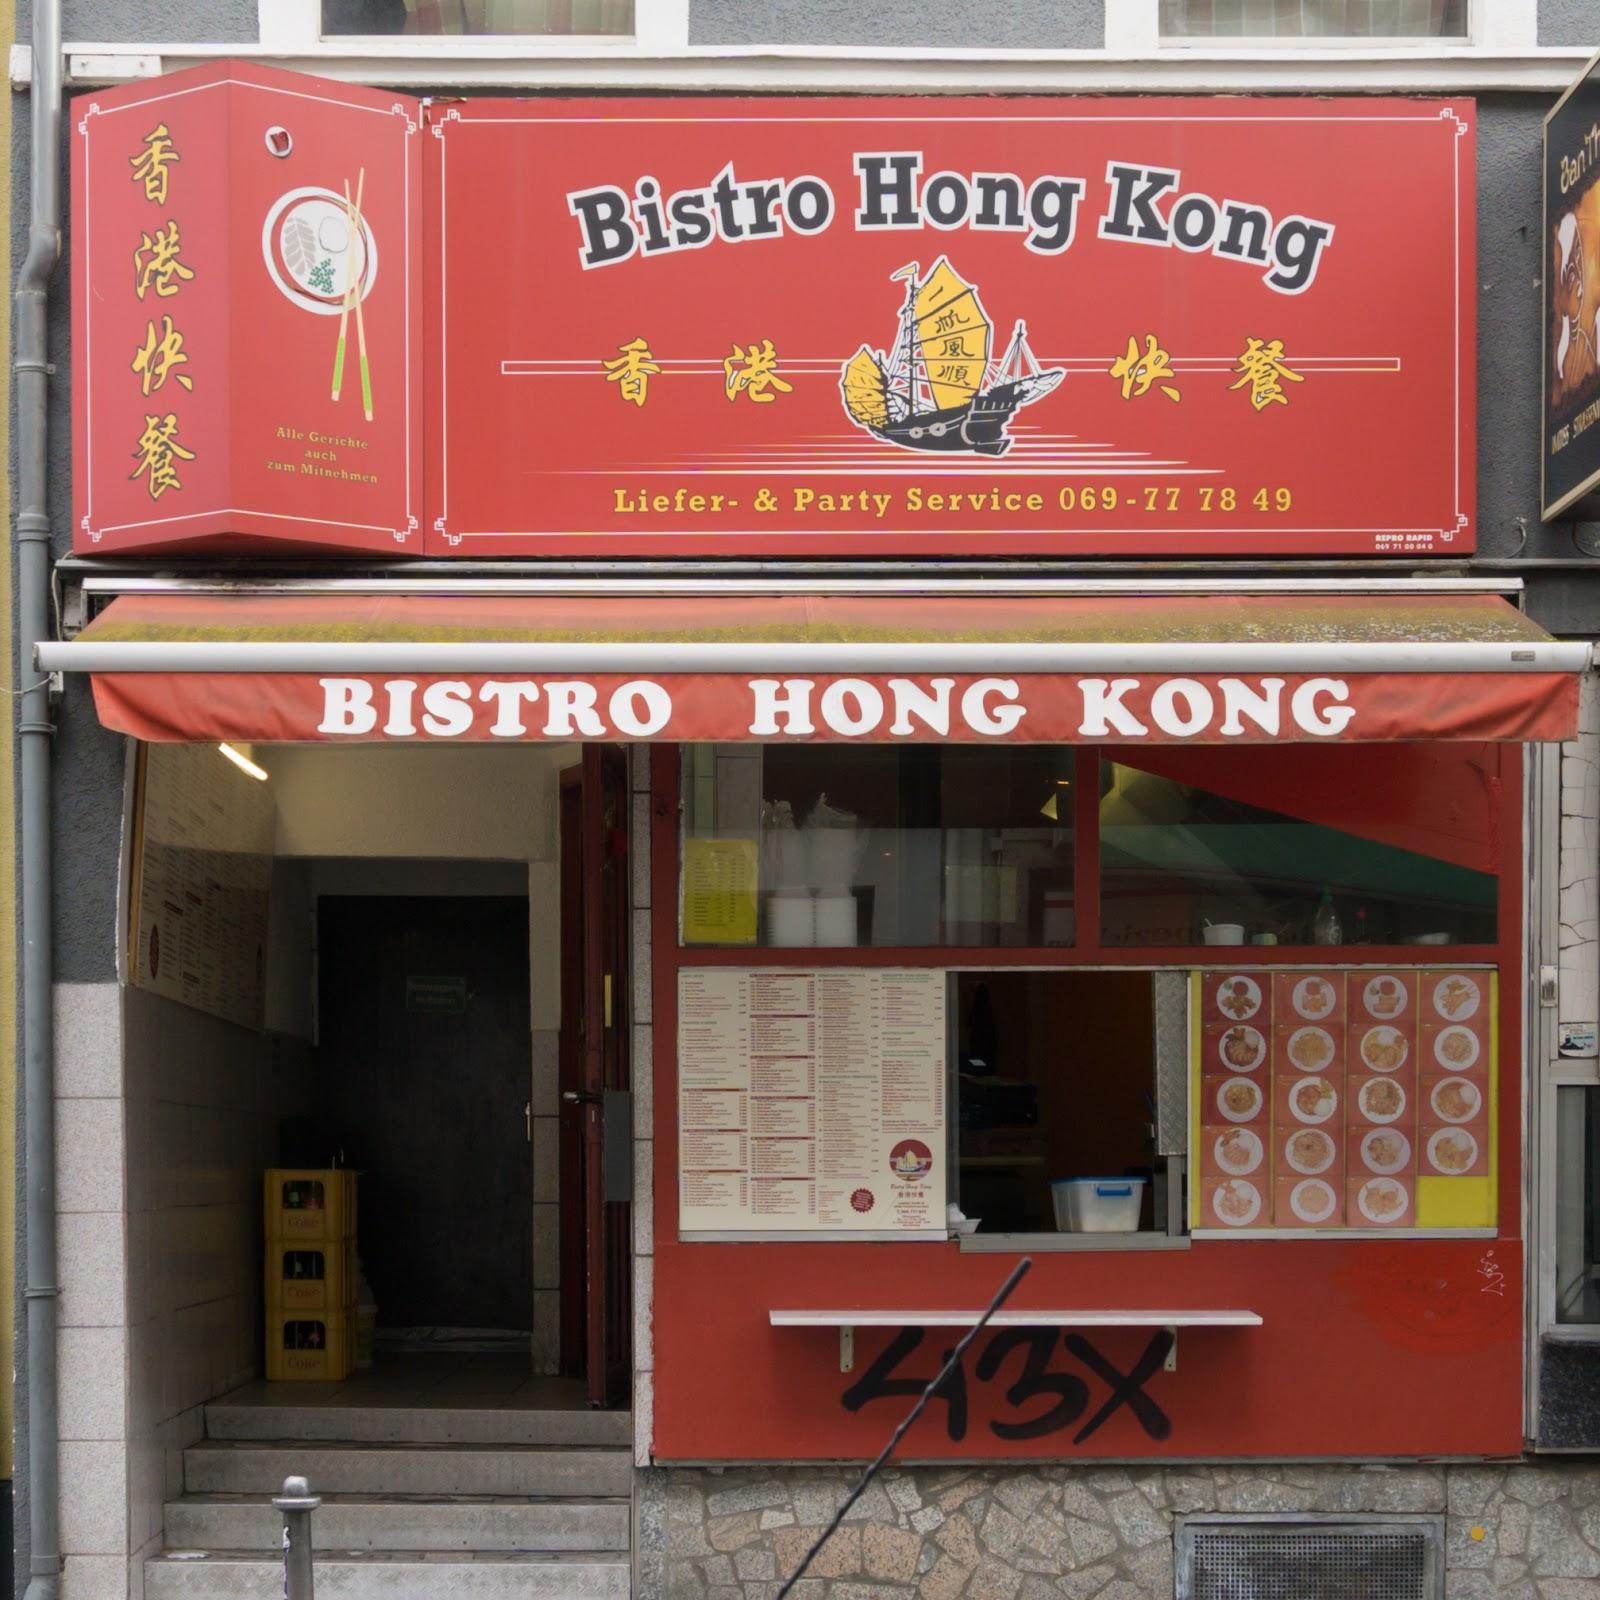 Restaurant "Bistro Hong Kong" in Frankfurt am Main